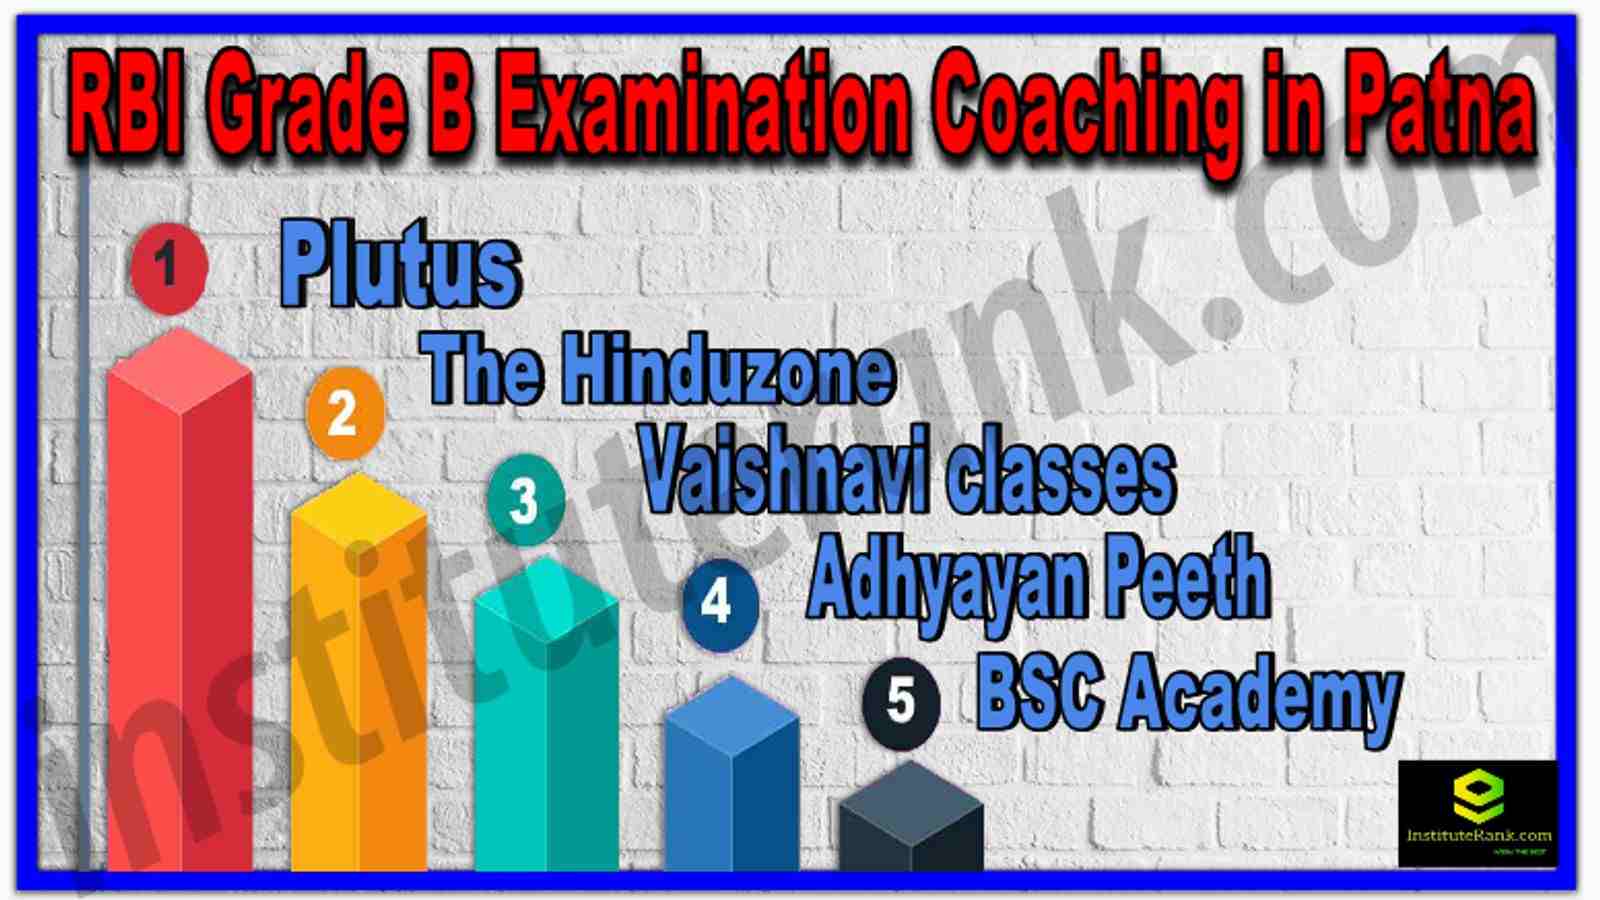 RBI Grade B Examination Coaching in Patna